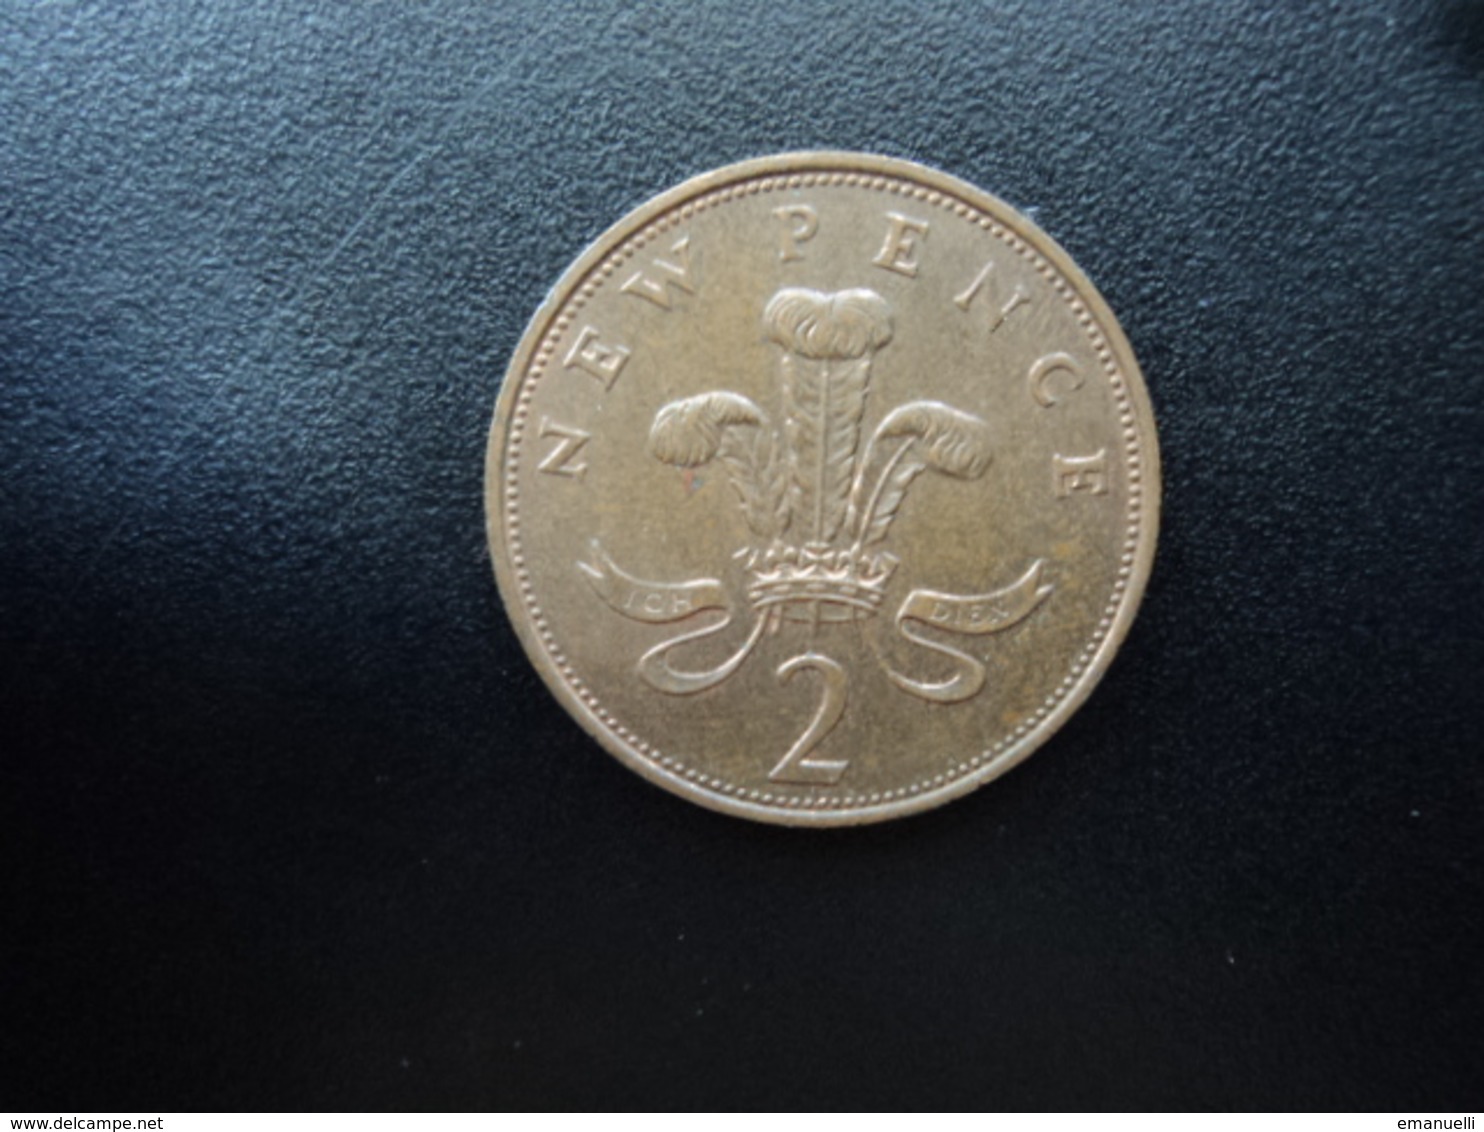 ROYAUME UNI : 2 NEW PENCE  1971   KM 916    SUP - 2 Pence & 2 New Pence